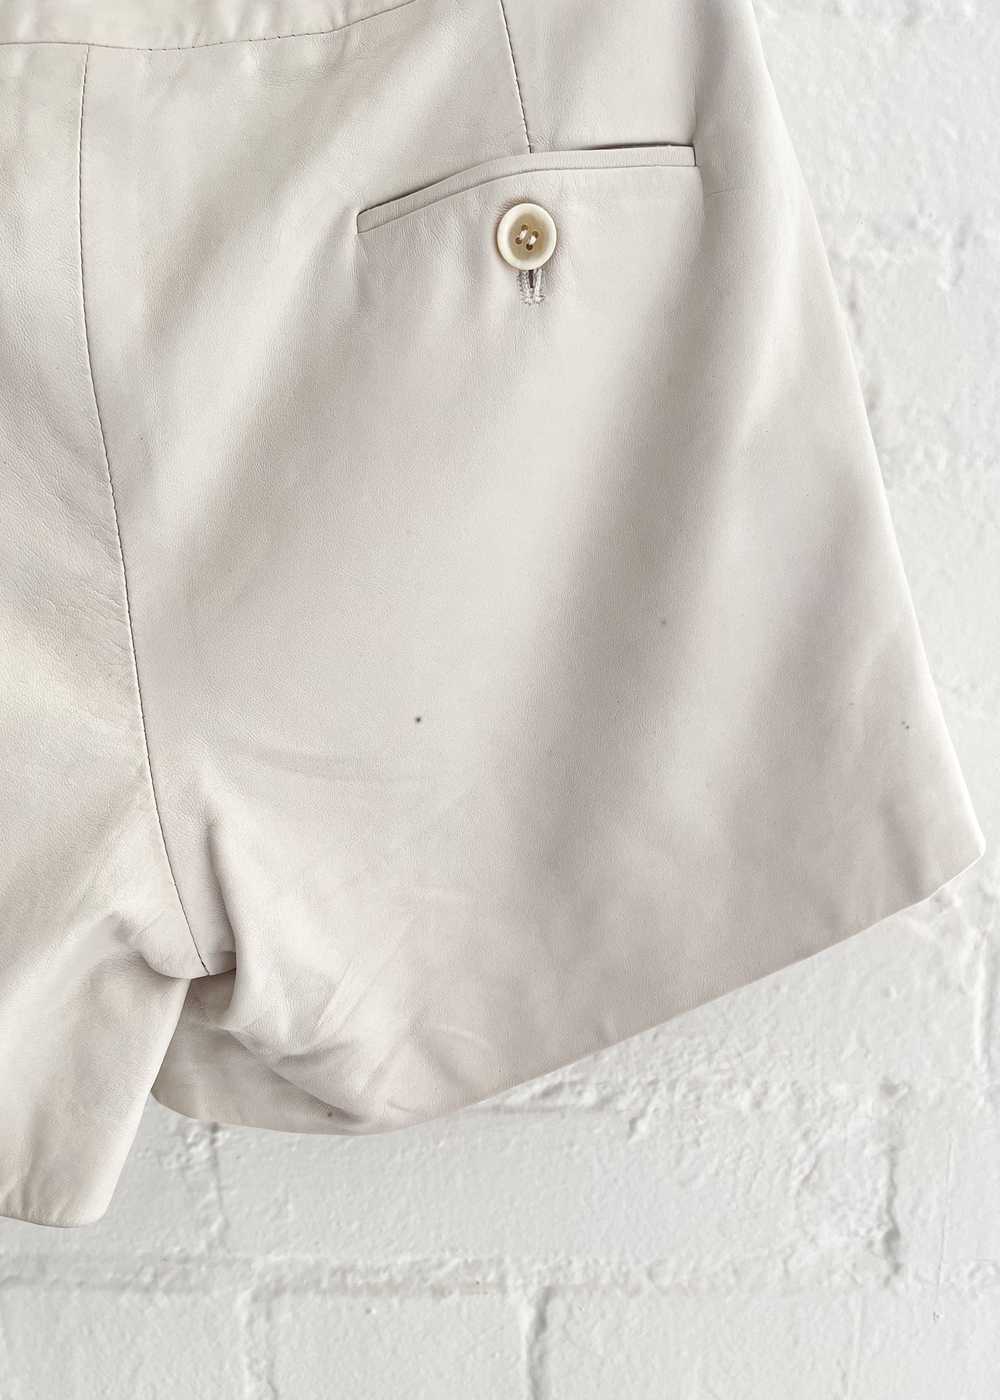 Vintage Calvin Klein Leather Shorts - image 5